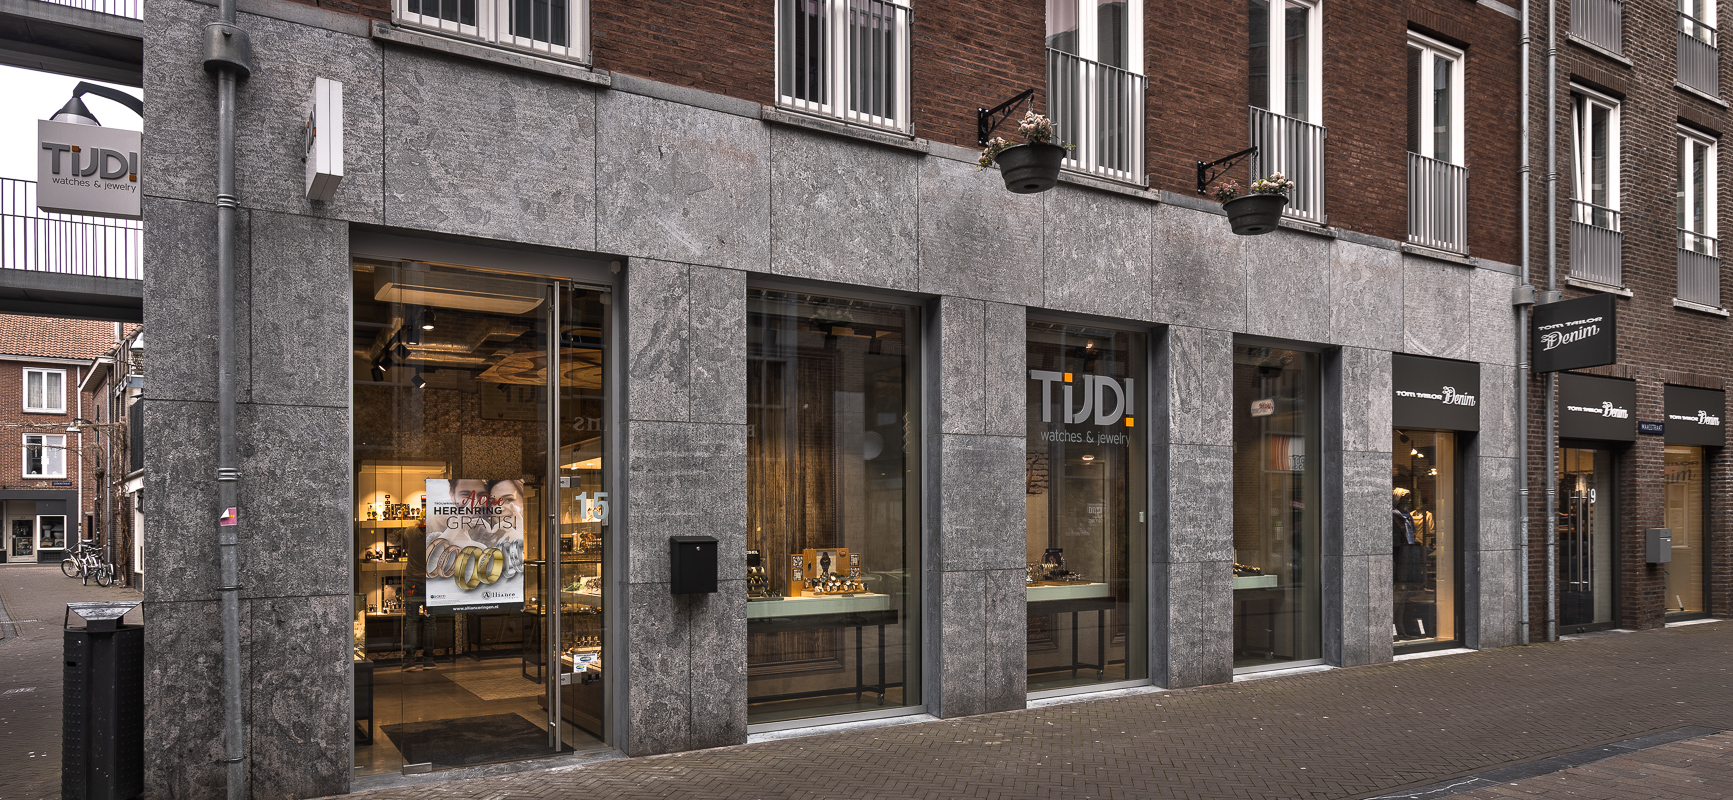 Tijd! Watches & Jewelry | Venlo (NL) - 